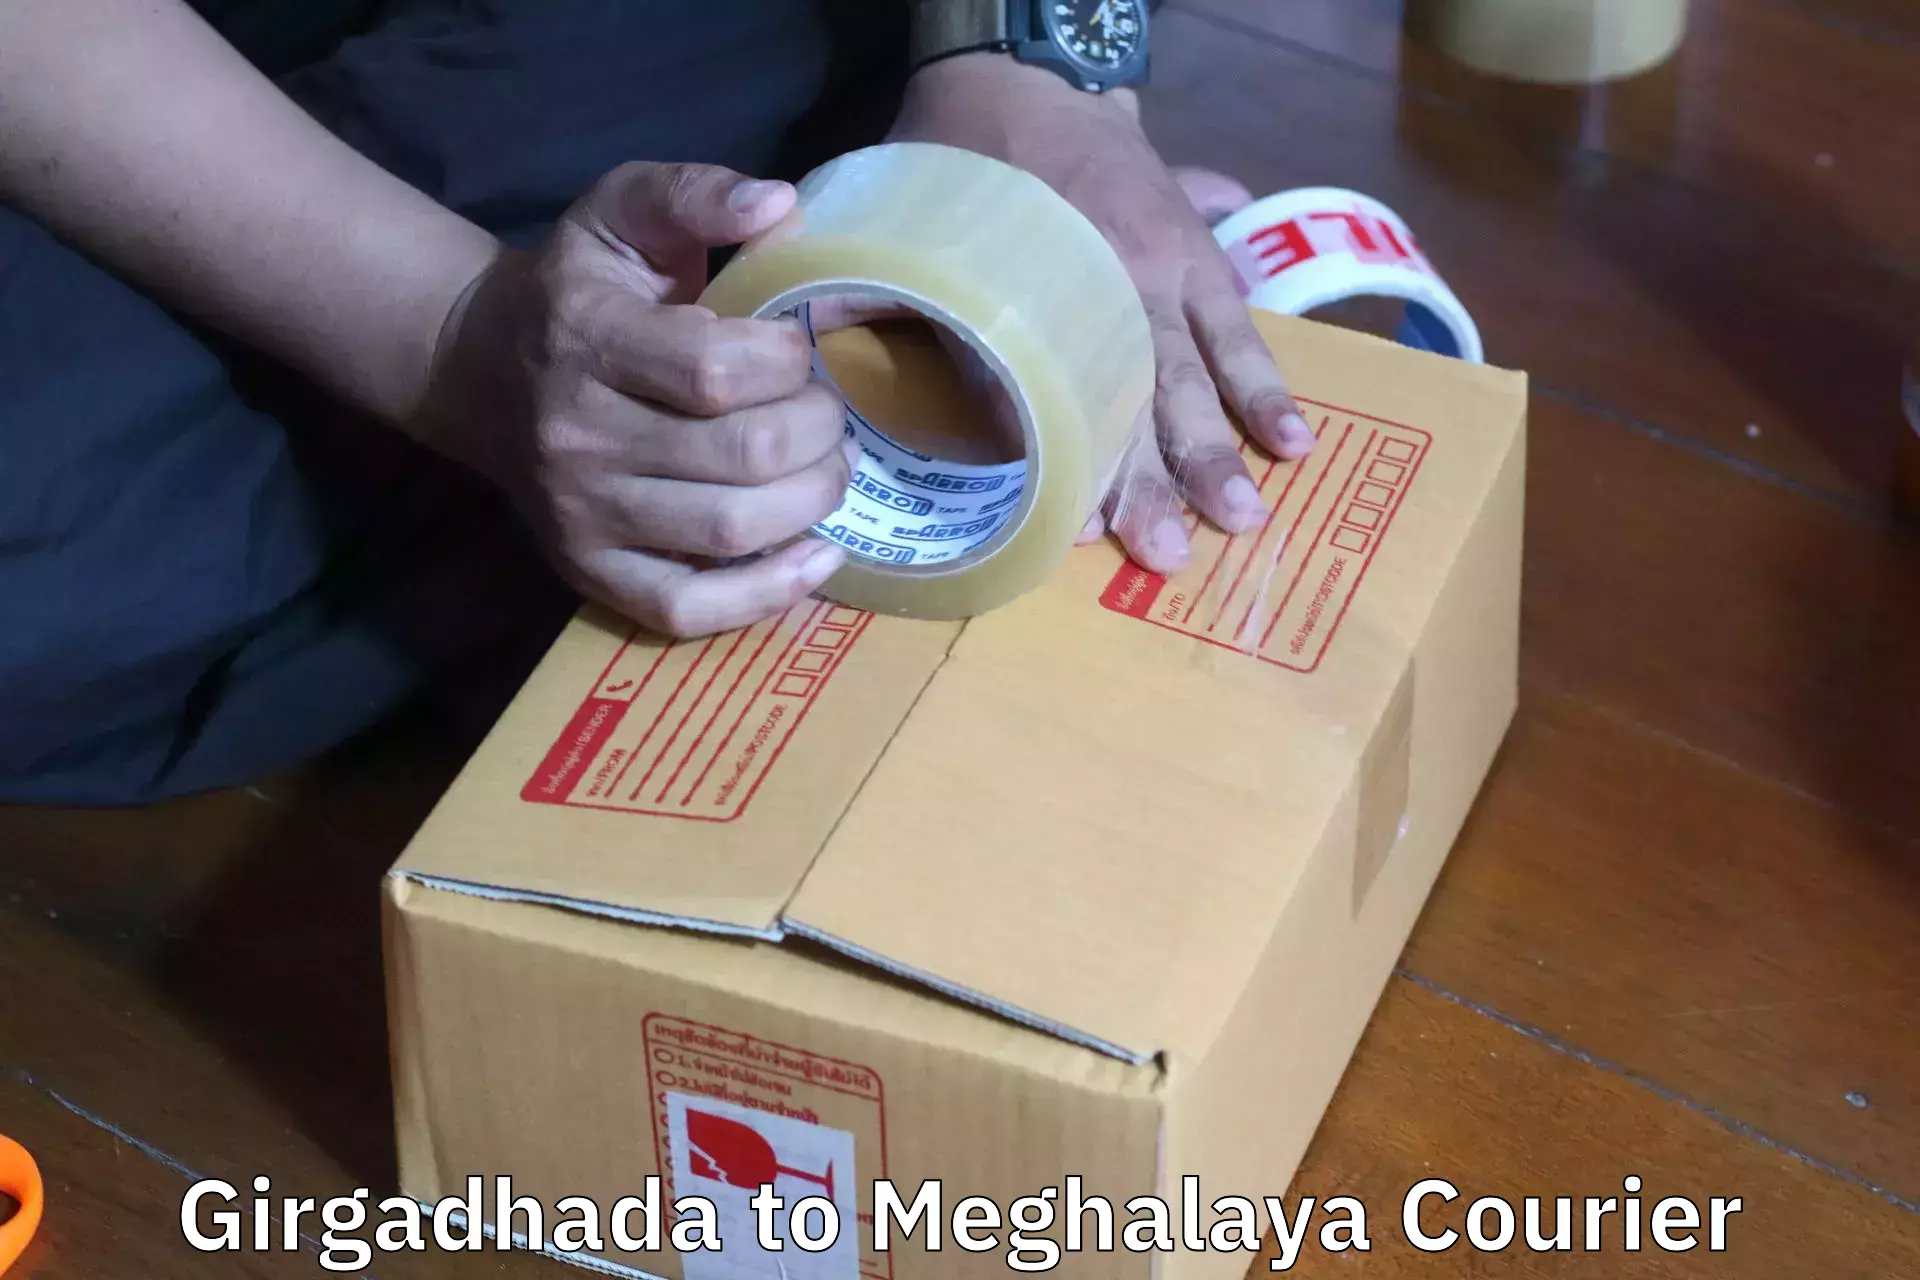 Furniture transport specialists Girgadhada to Meghalaya